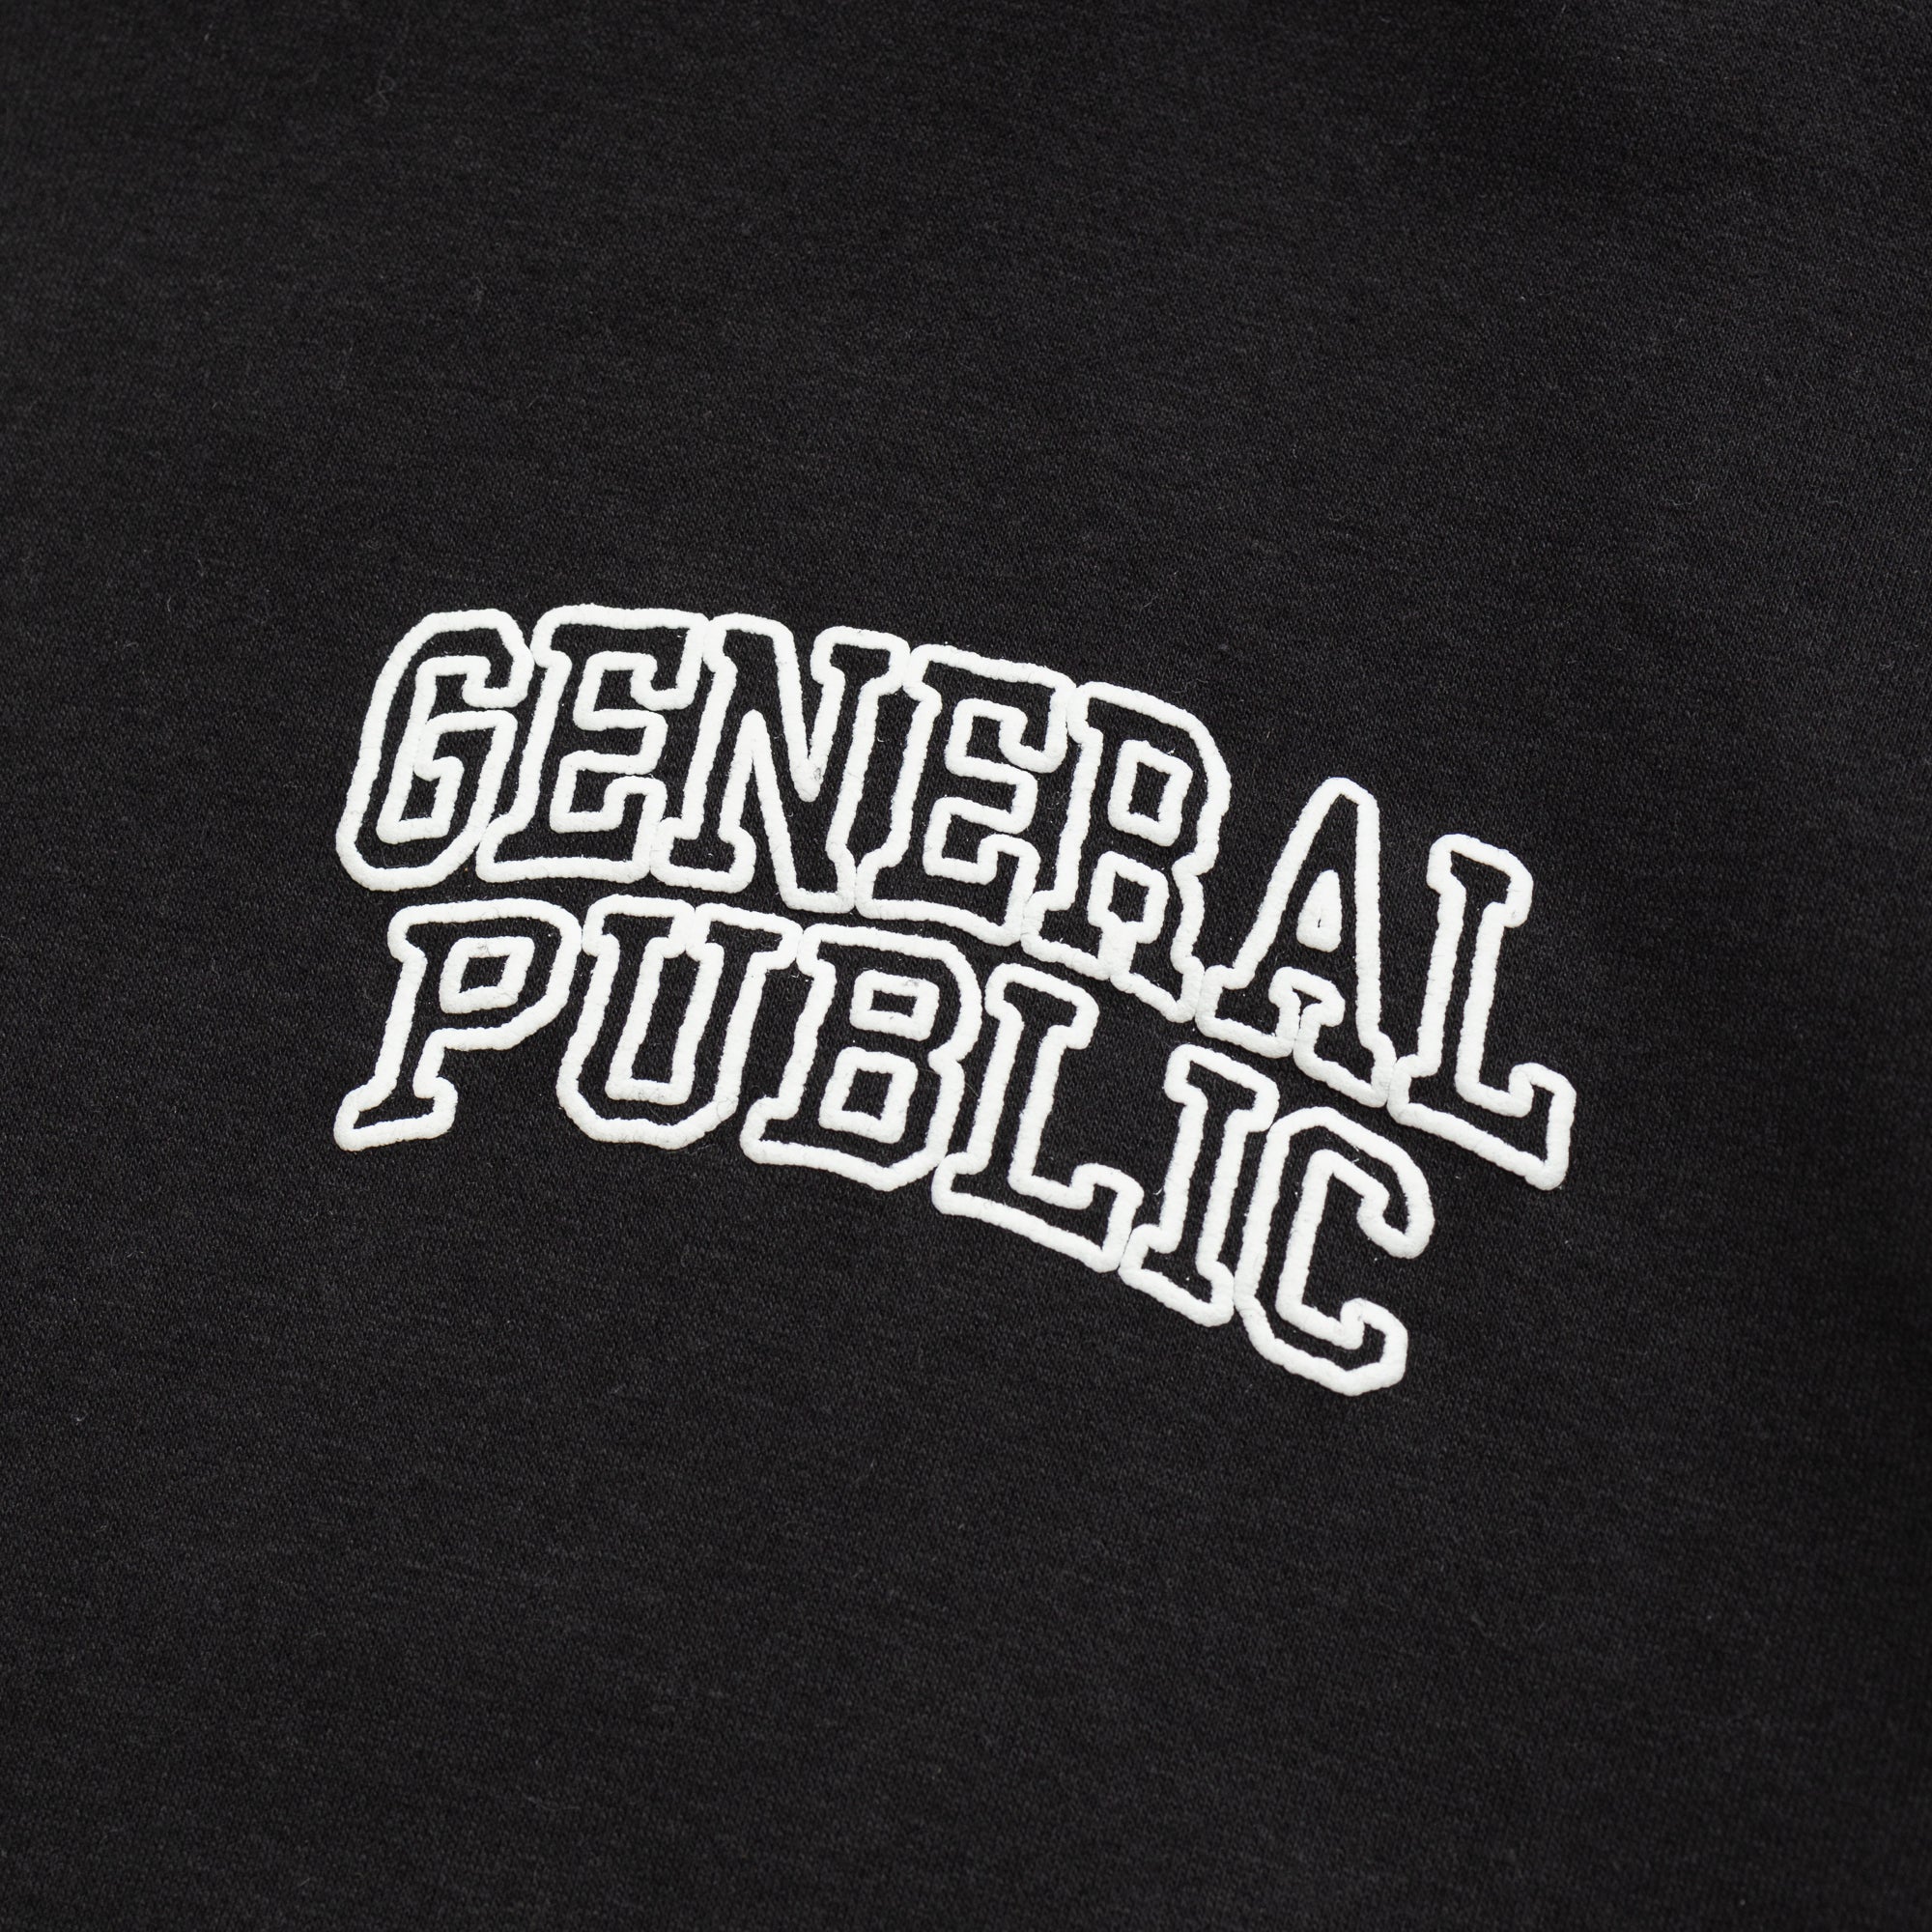 General Public Uniform Hoodie 'Black'